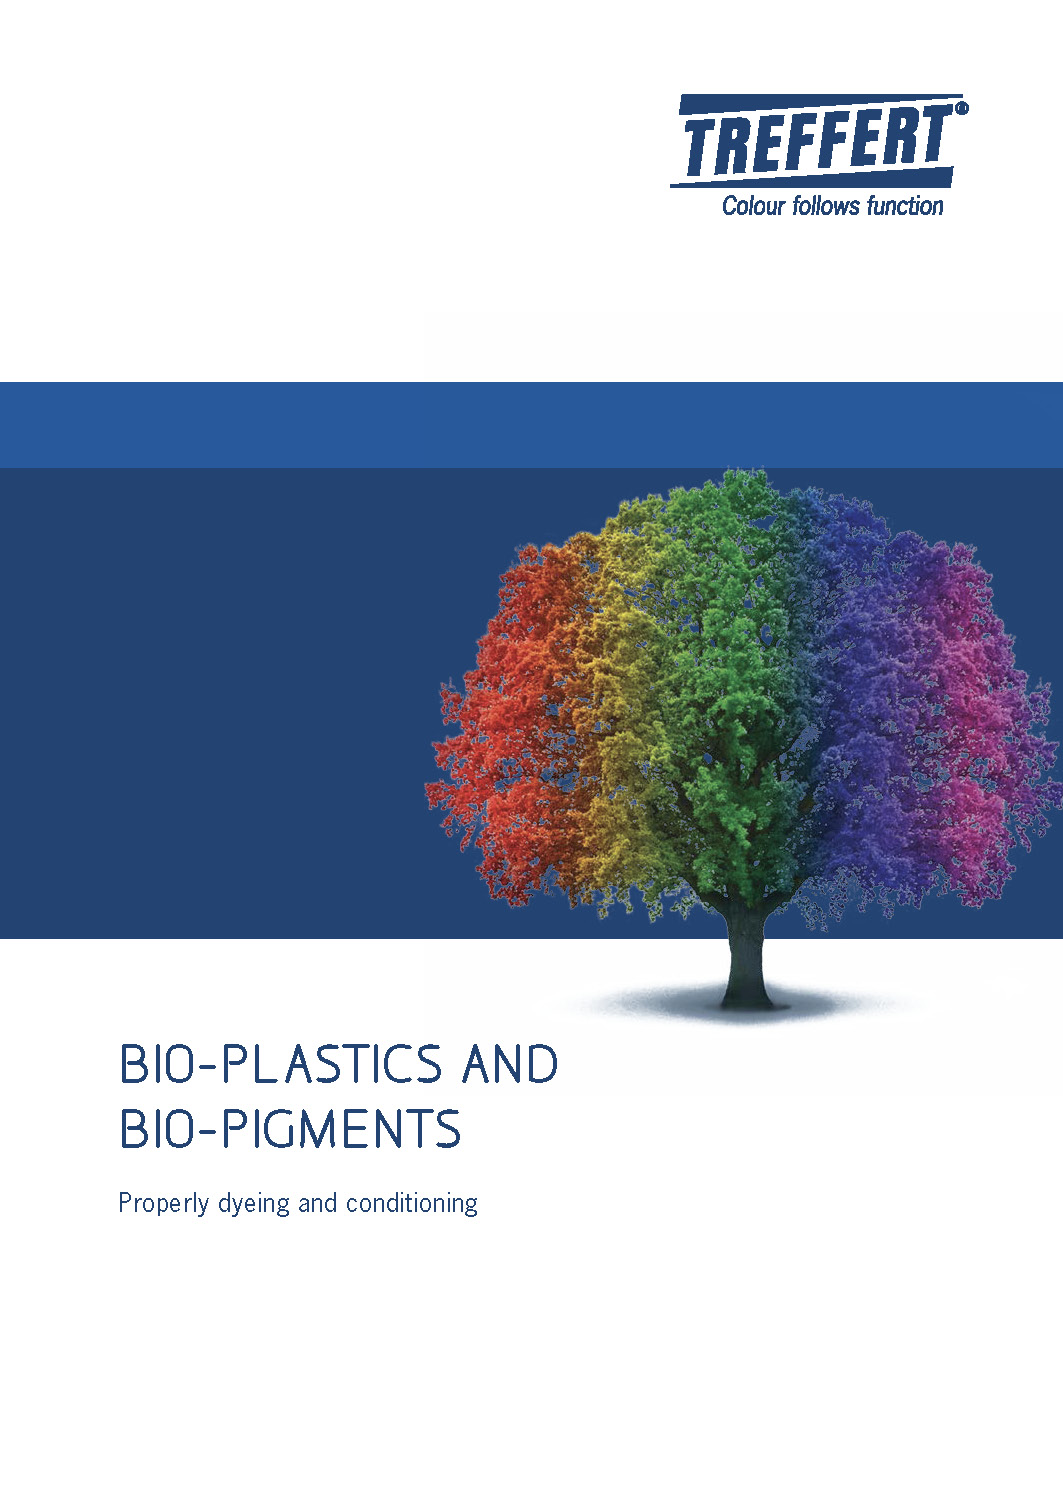 Treffert broschure about bioplastics and biopigments - Properly dyeing and perserving